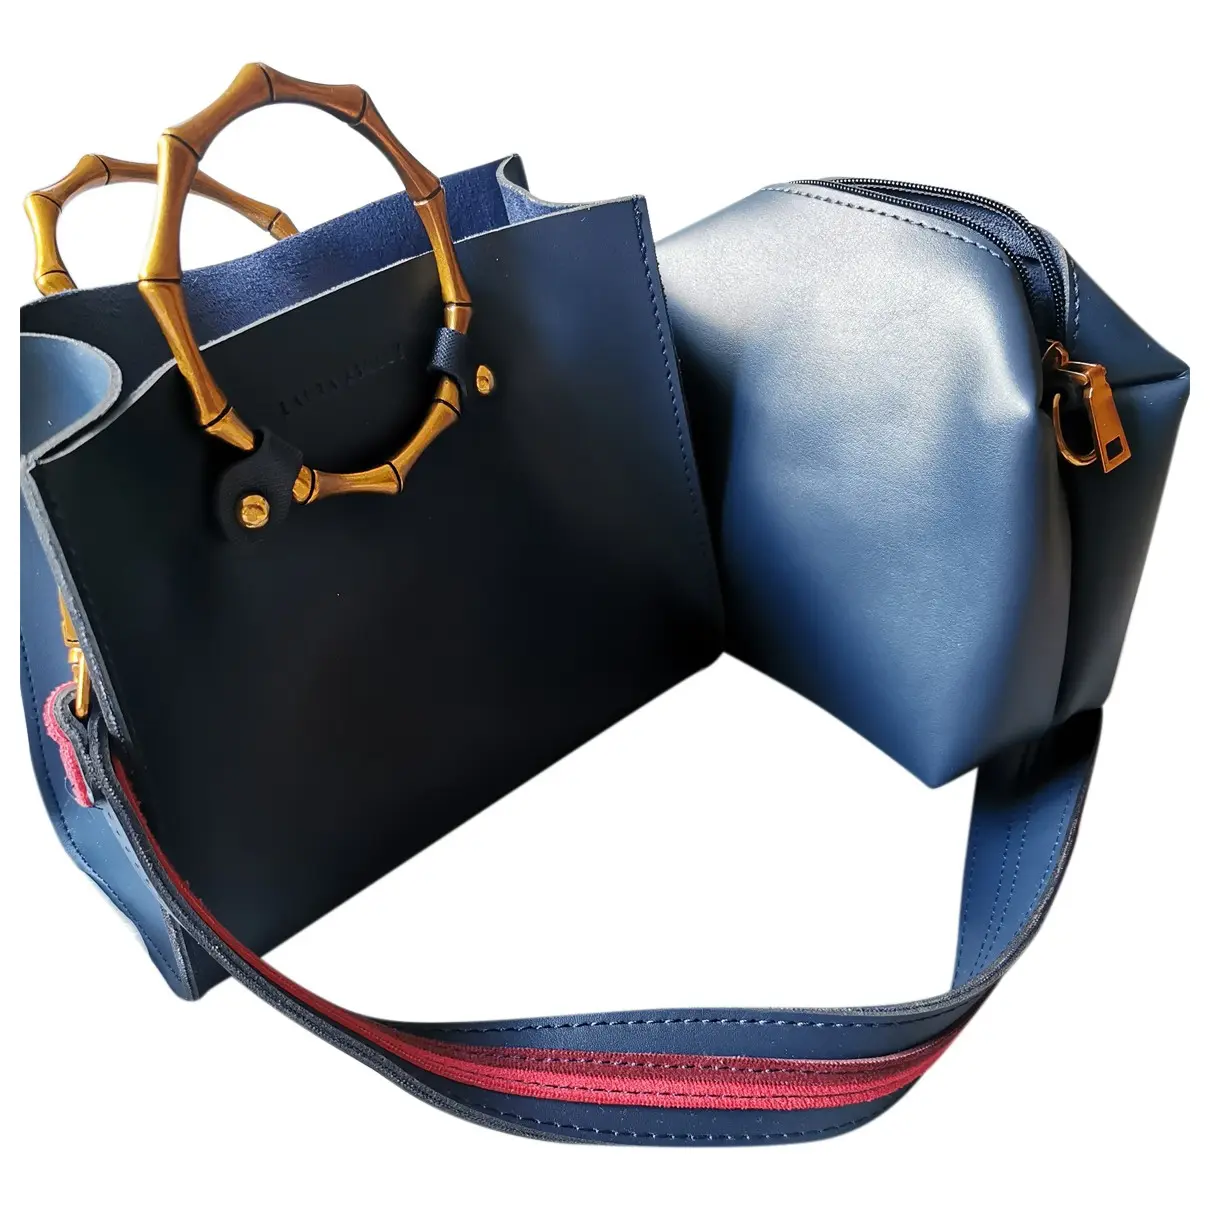 Leather handbag LAURA ASHLEY